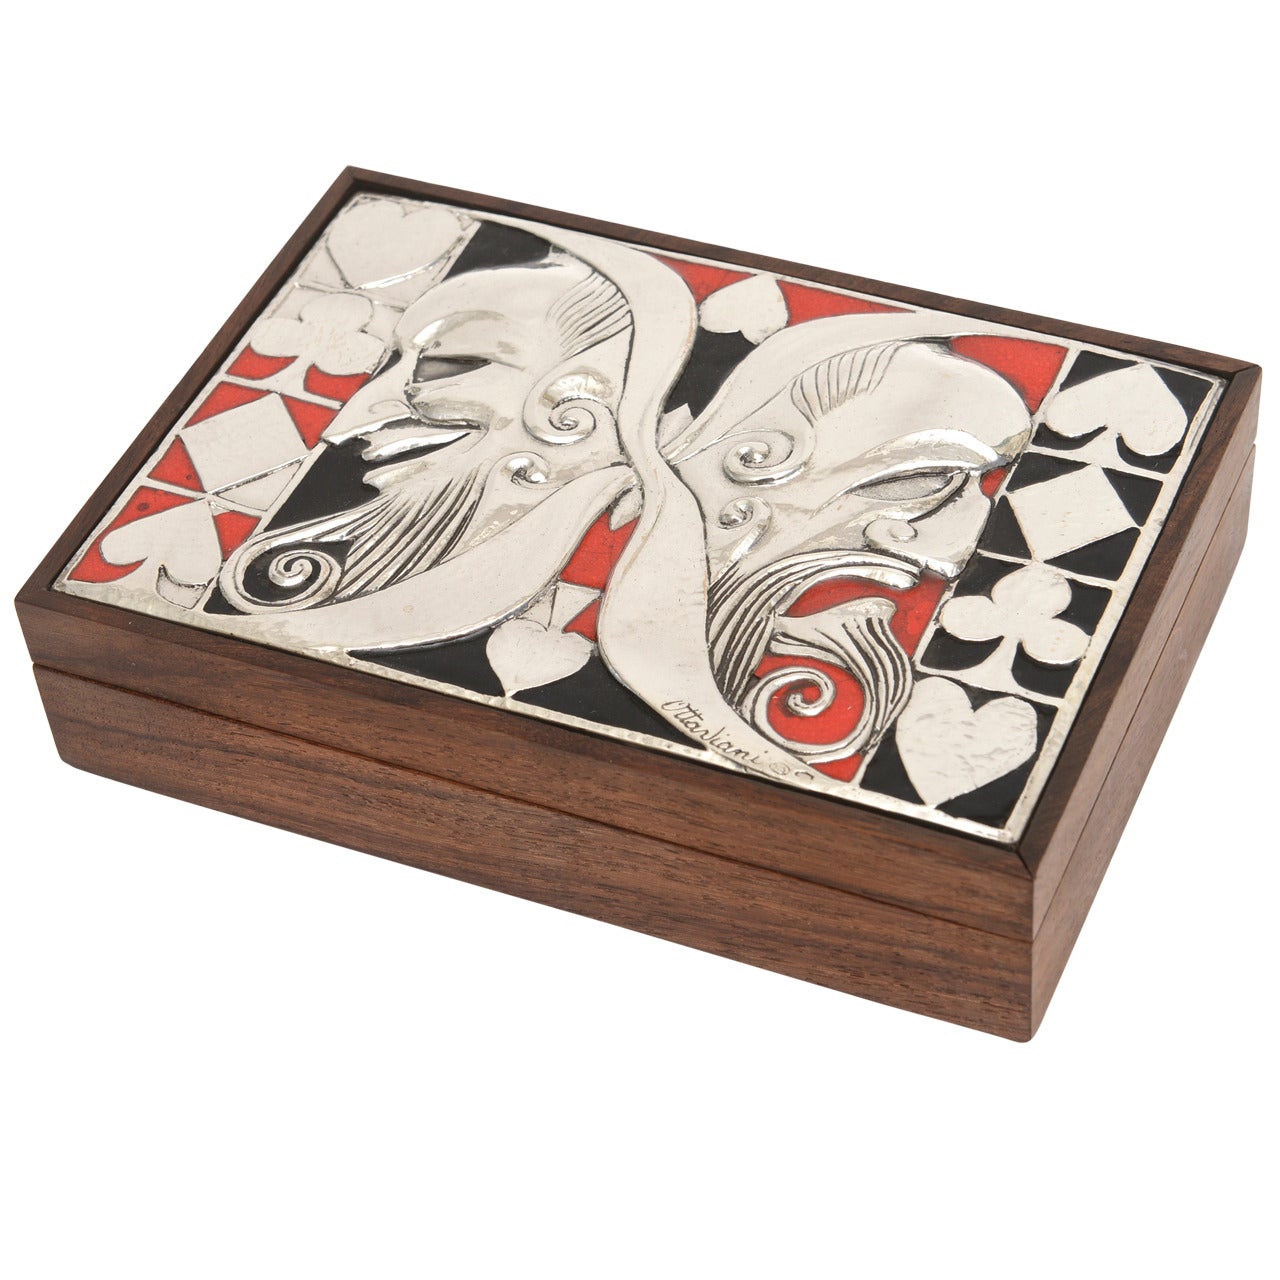 Italian Ottaviani Sterling Silver, Enamel and Wood Card Playing Box